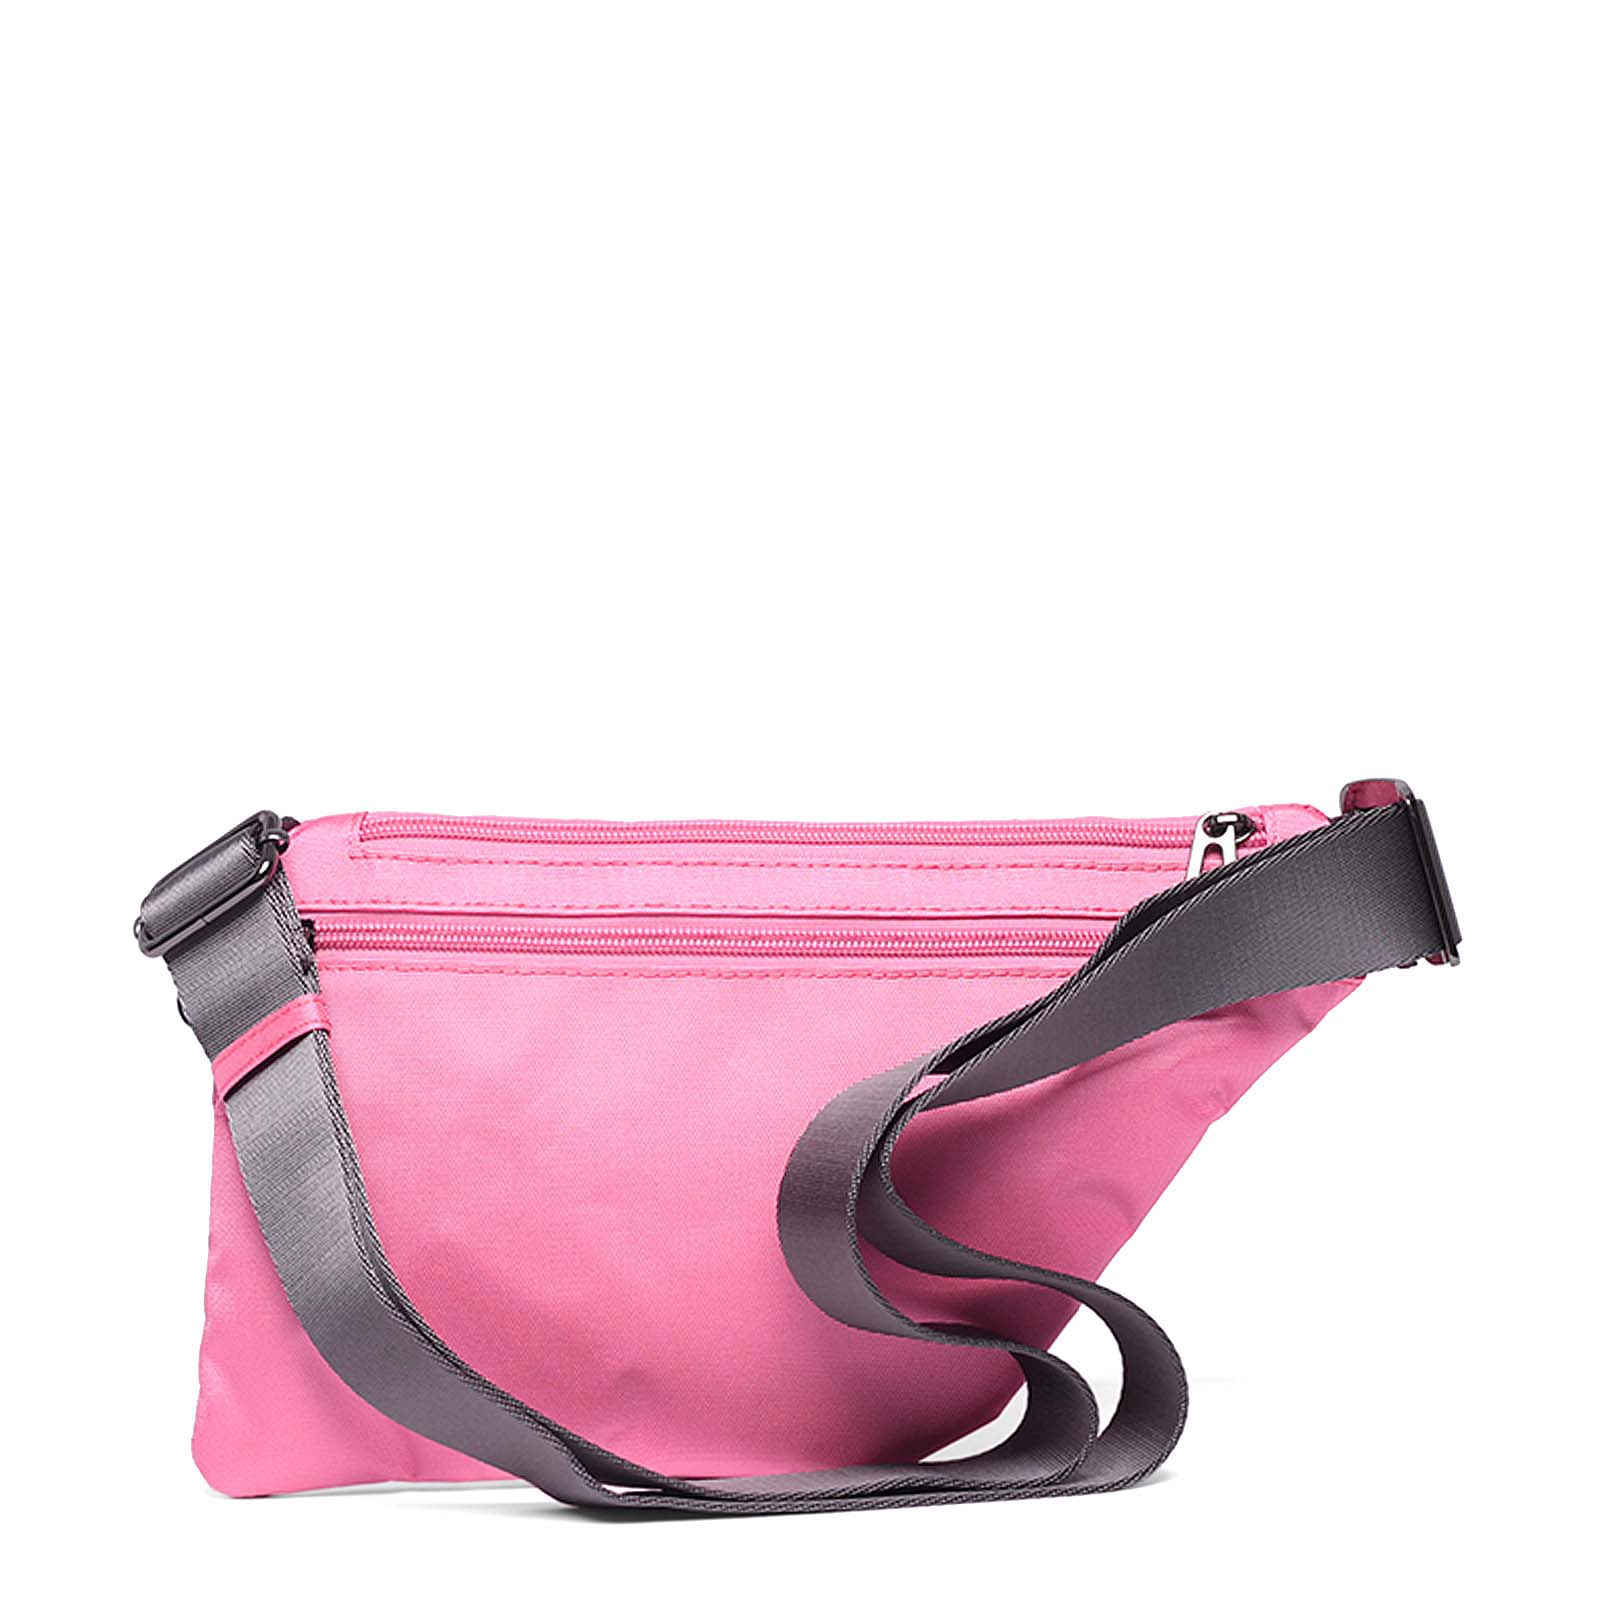 pochete-army-bag-planet-70474-unclek-rosa-pink-4